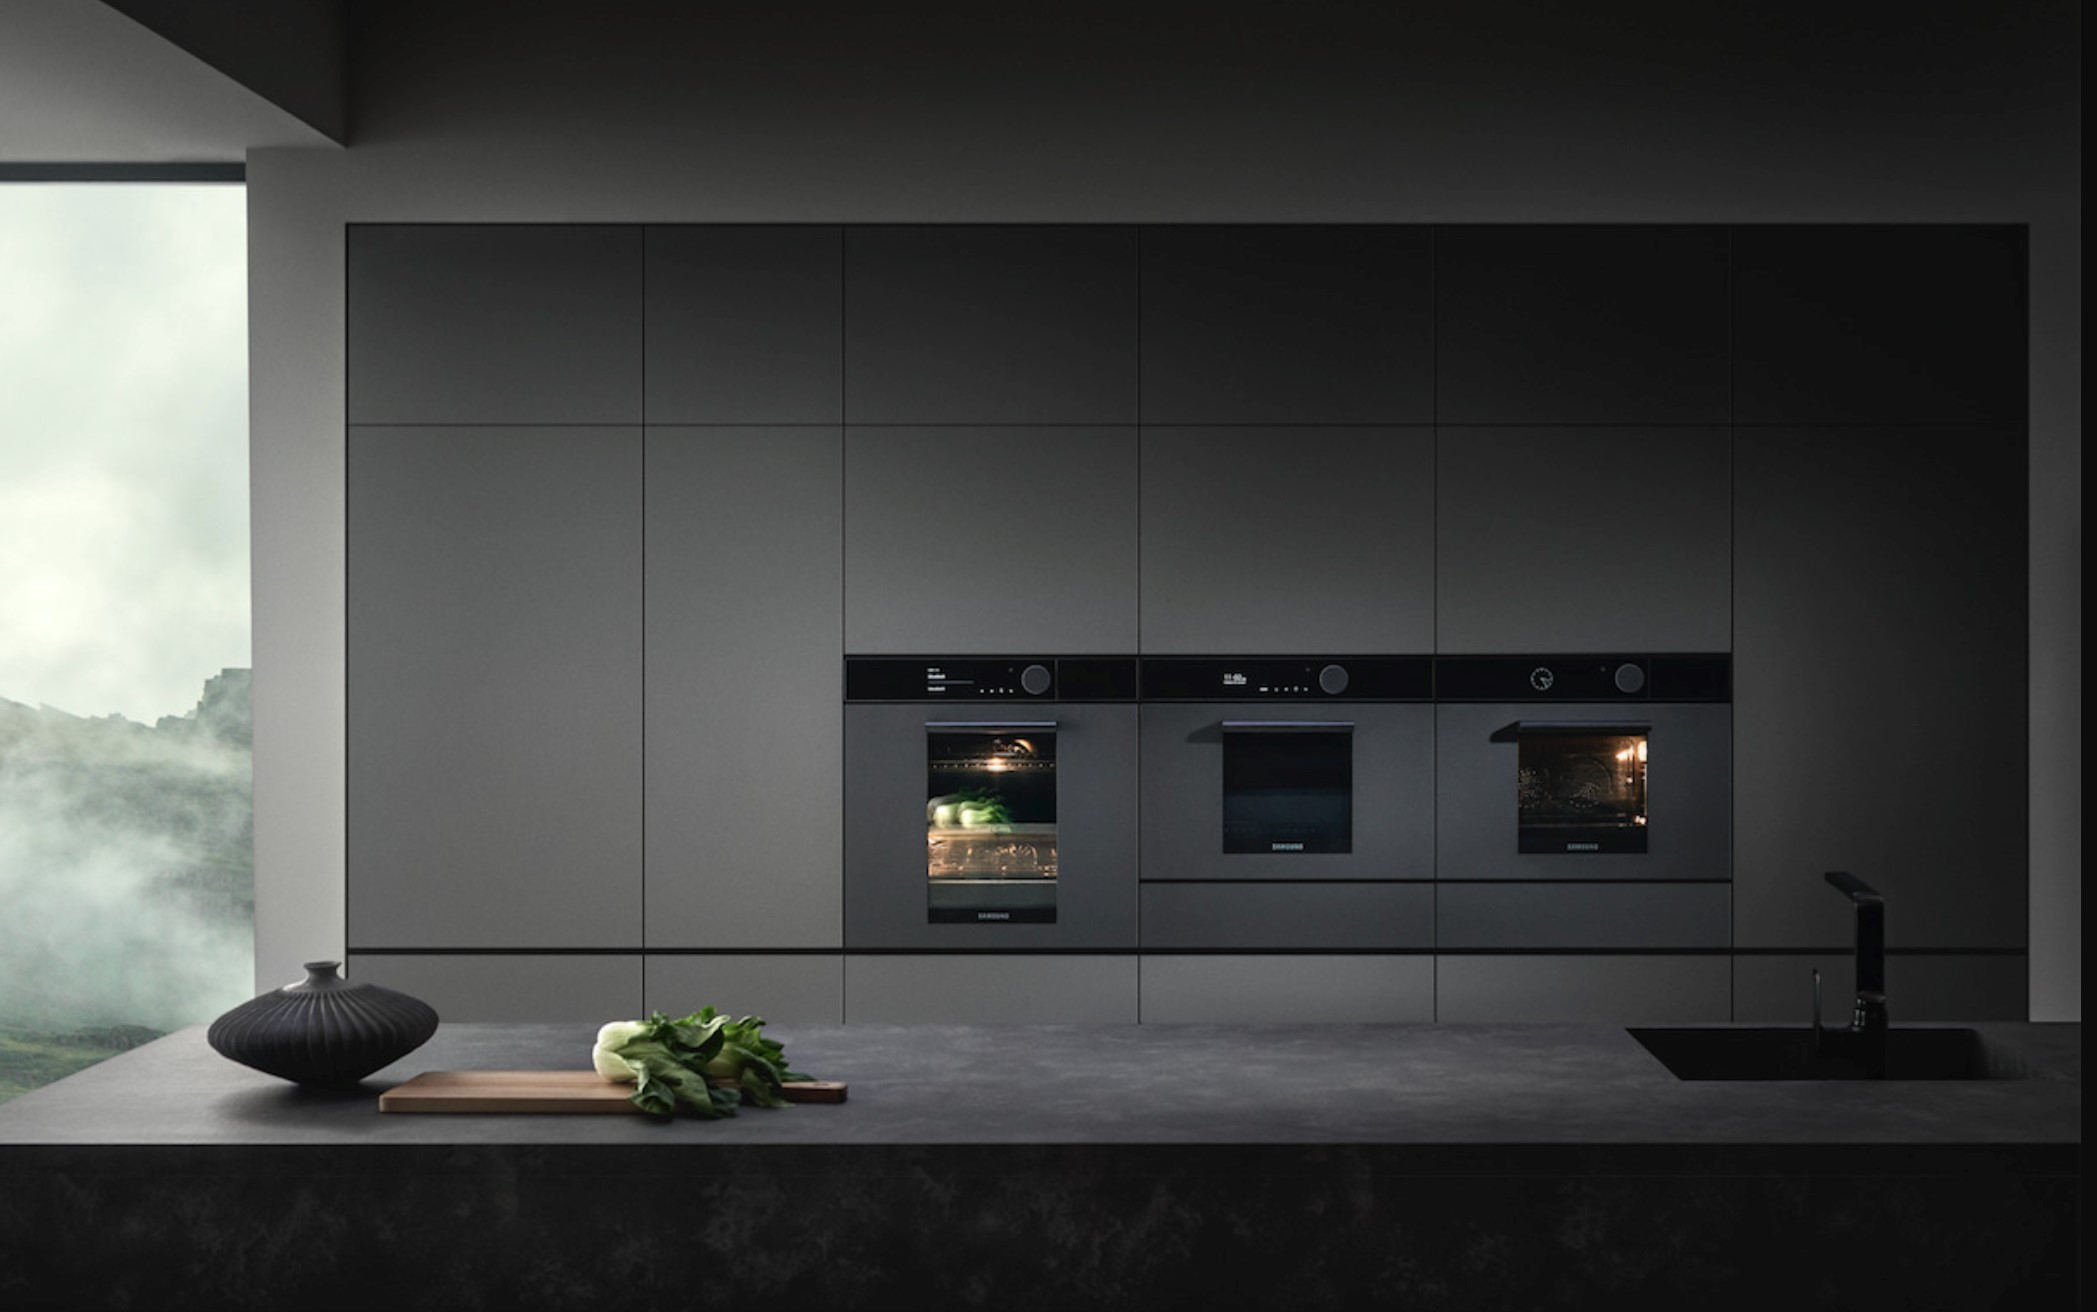 The total black kitchen - Home Appliances World